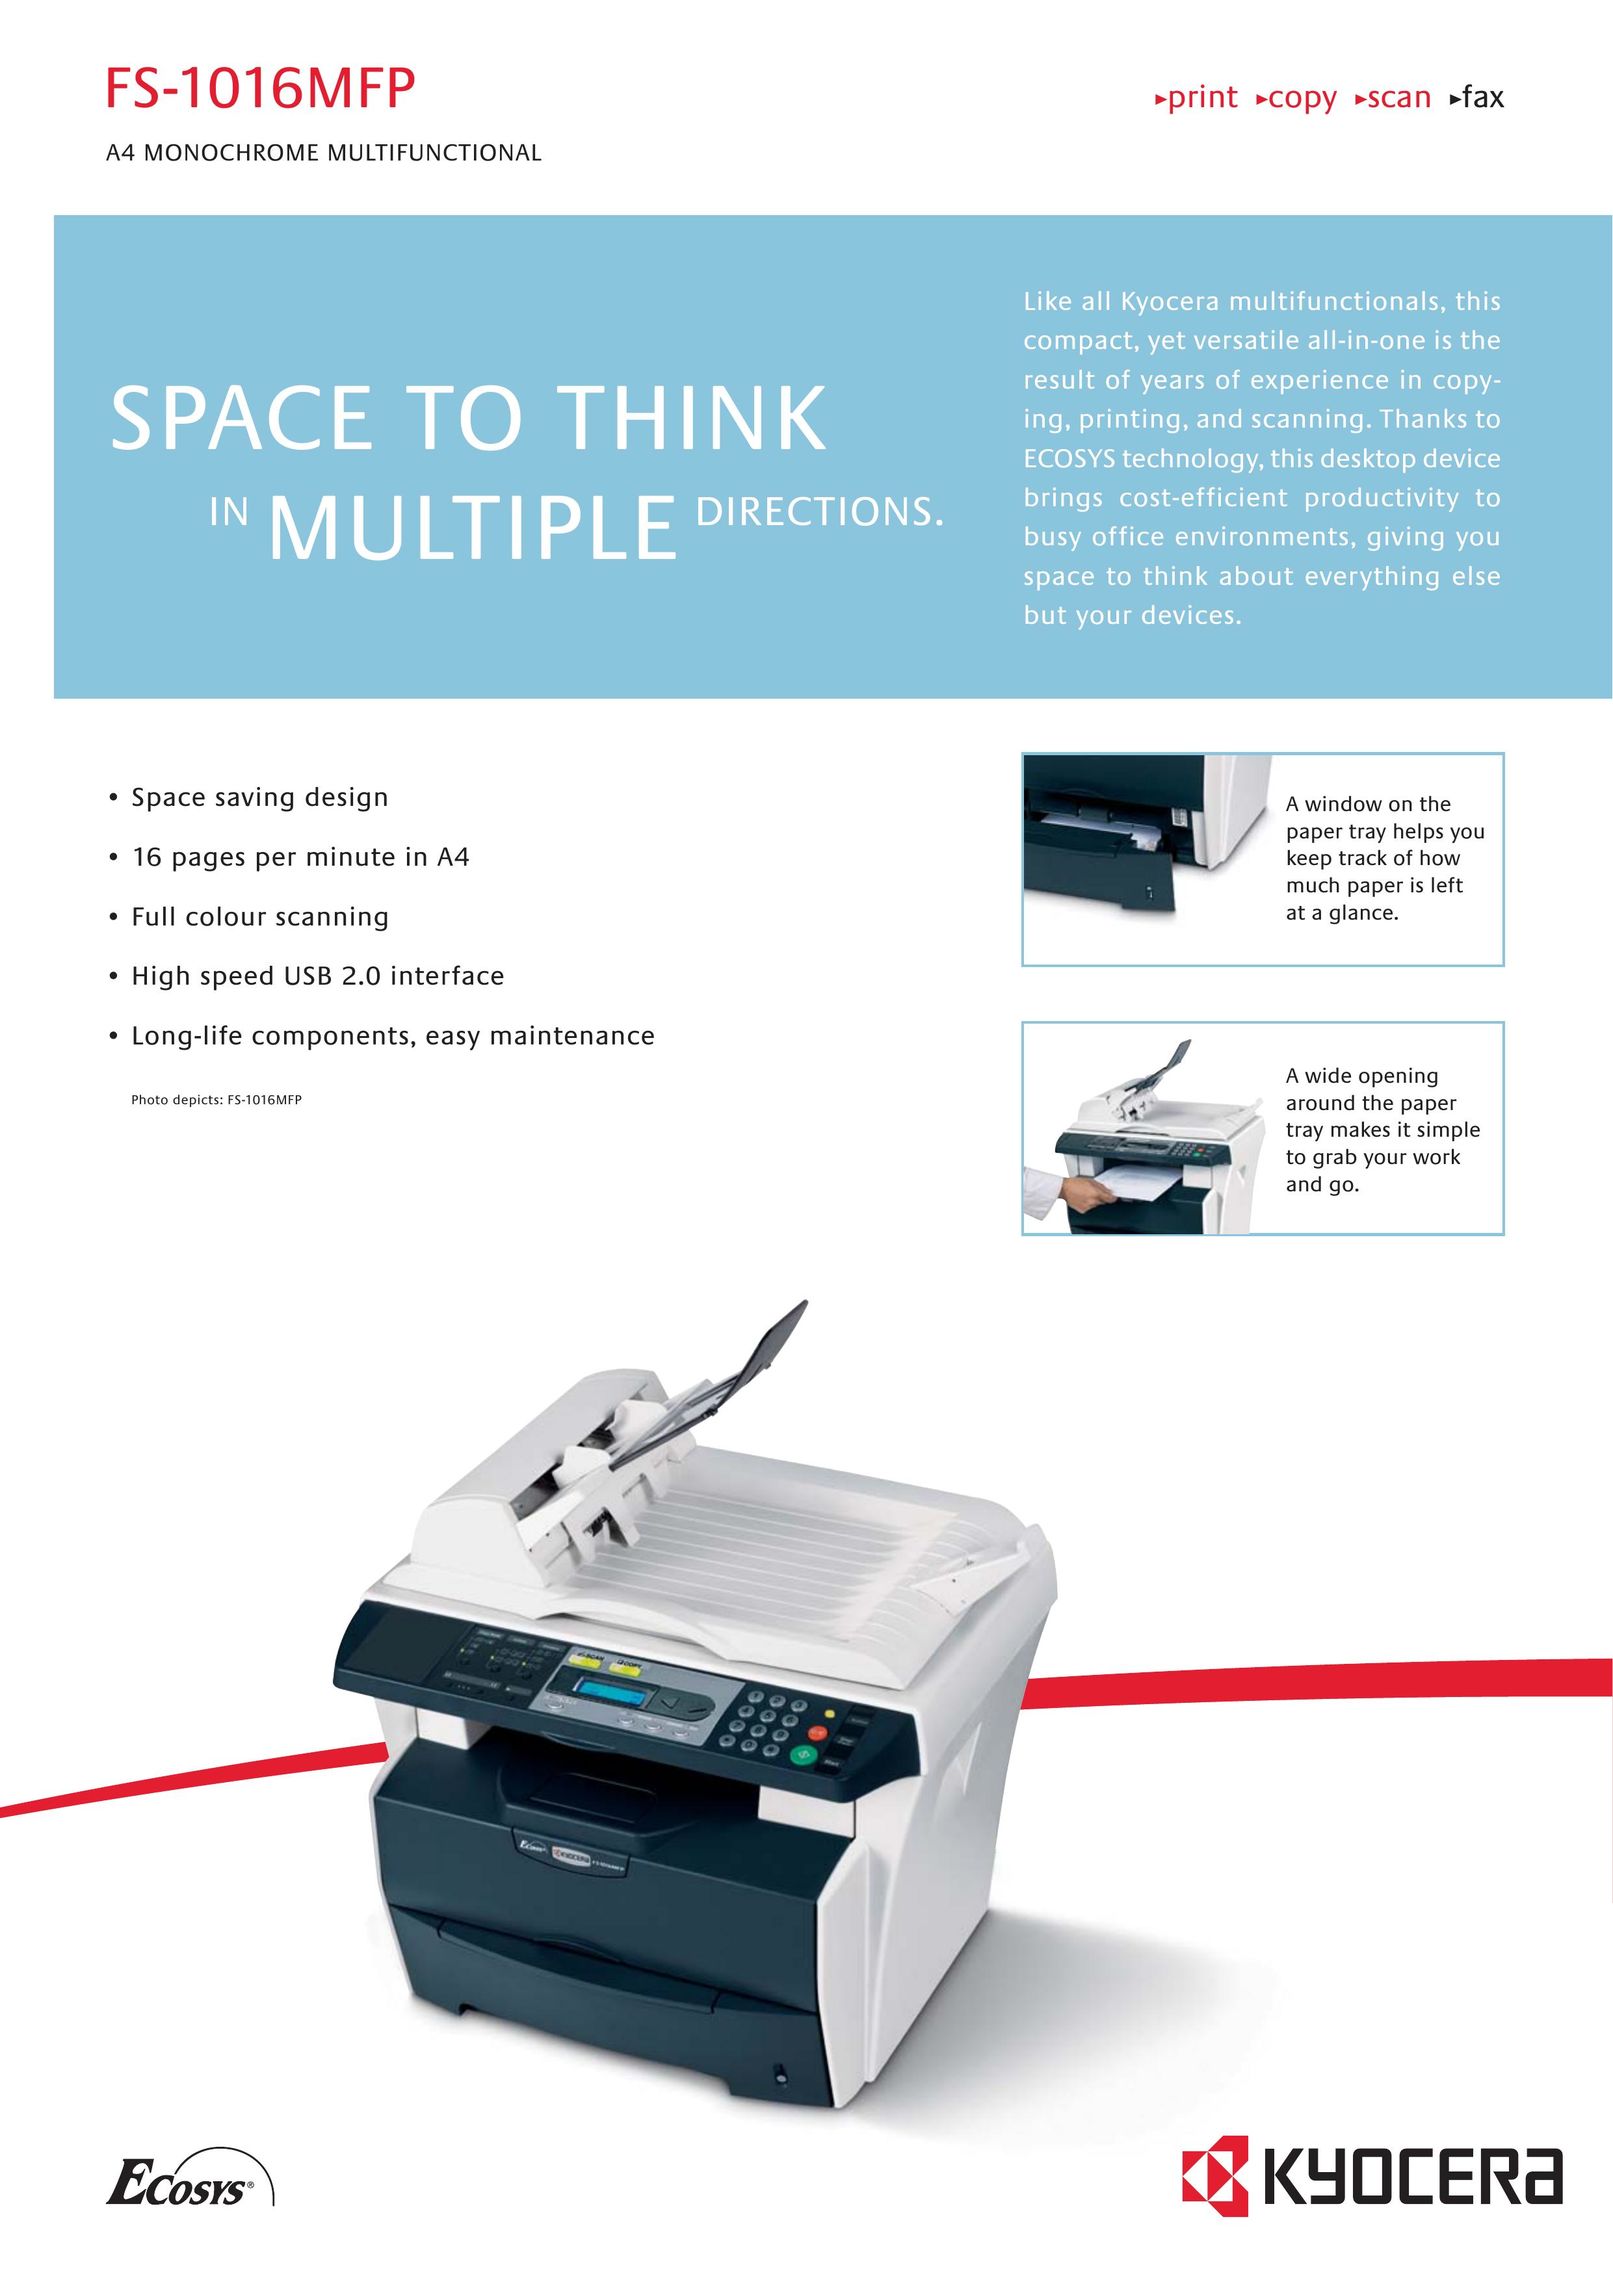 Kyocera FS-1016MFP Printer User Manual